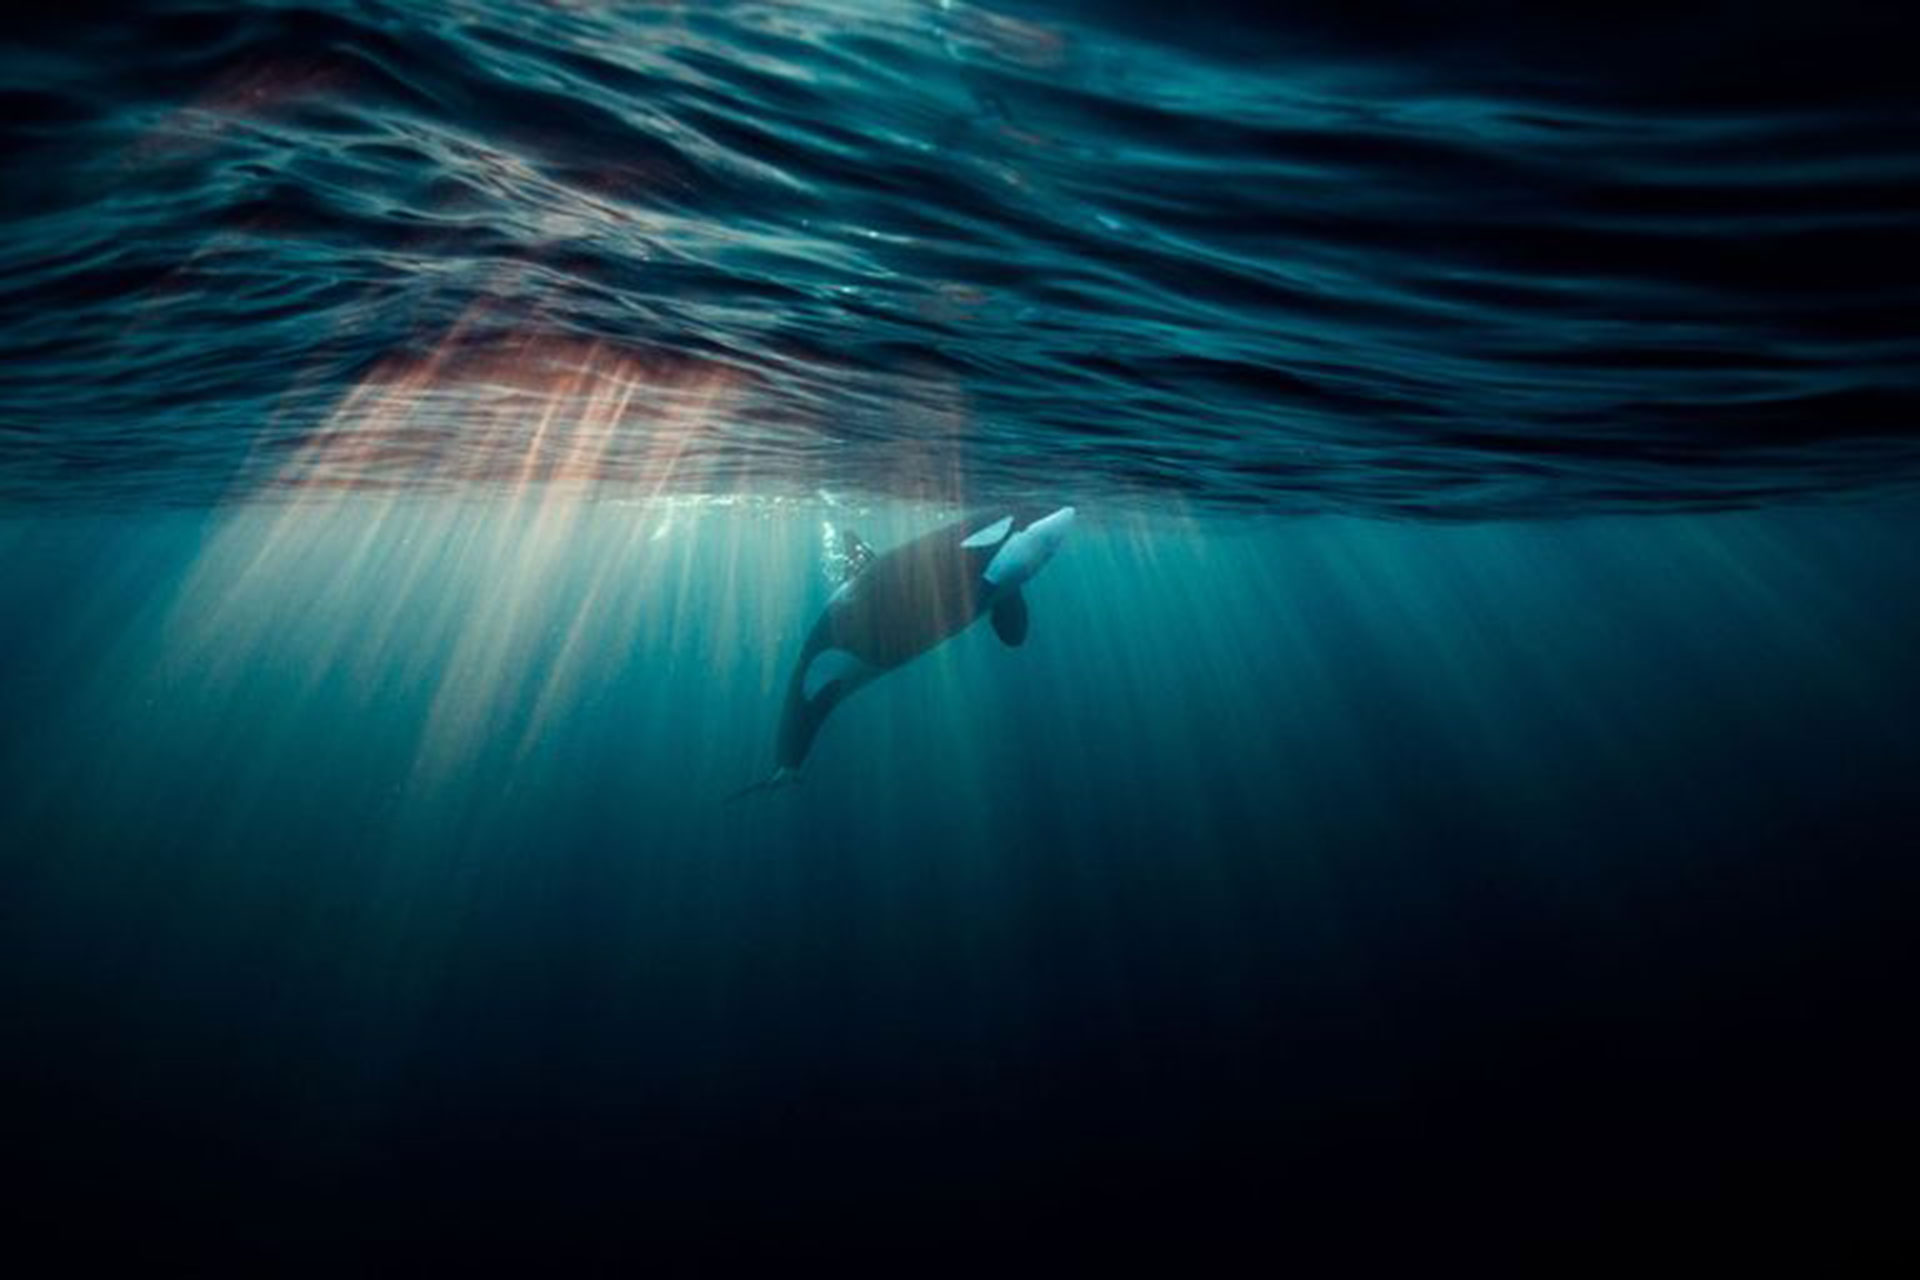 Orca swimming in the ocean